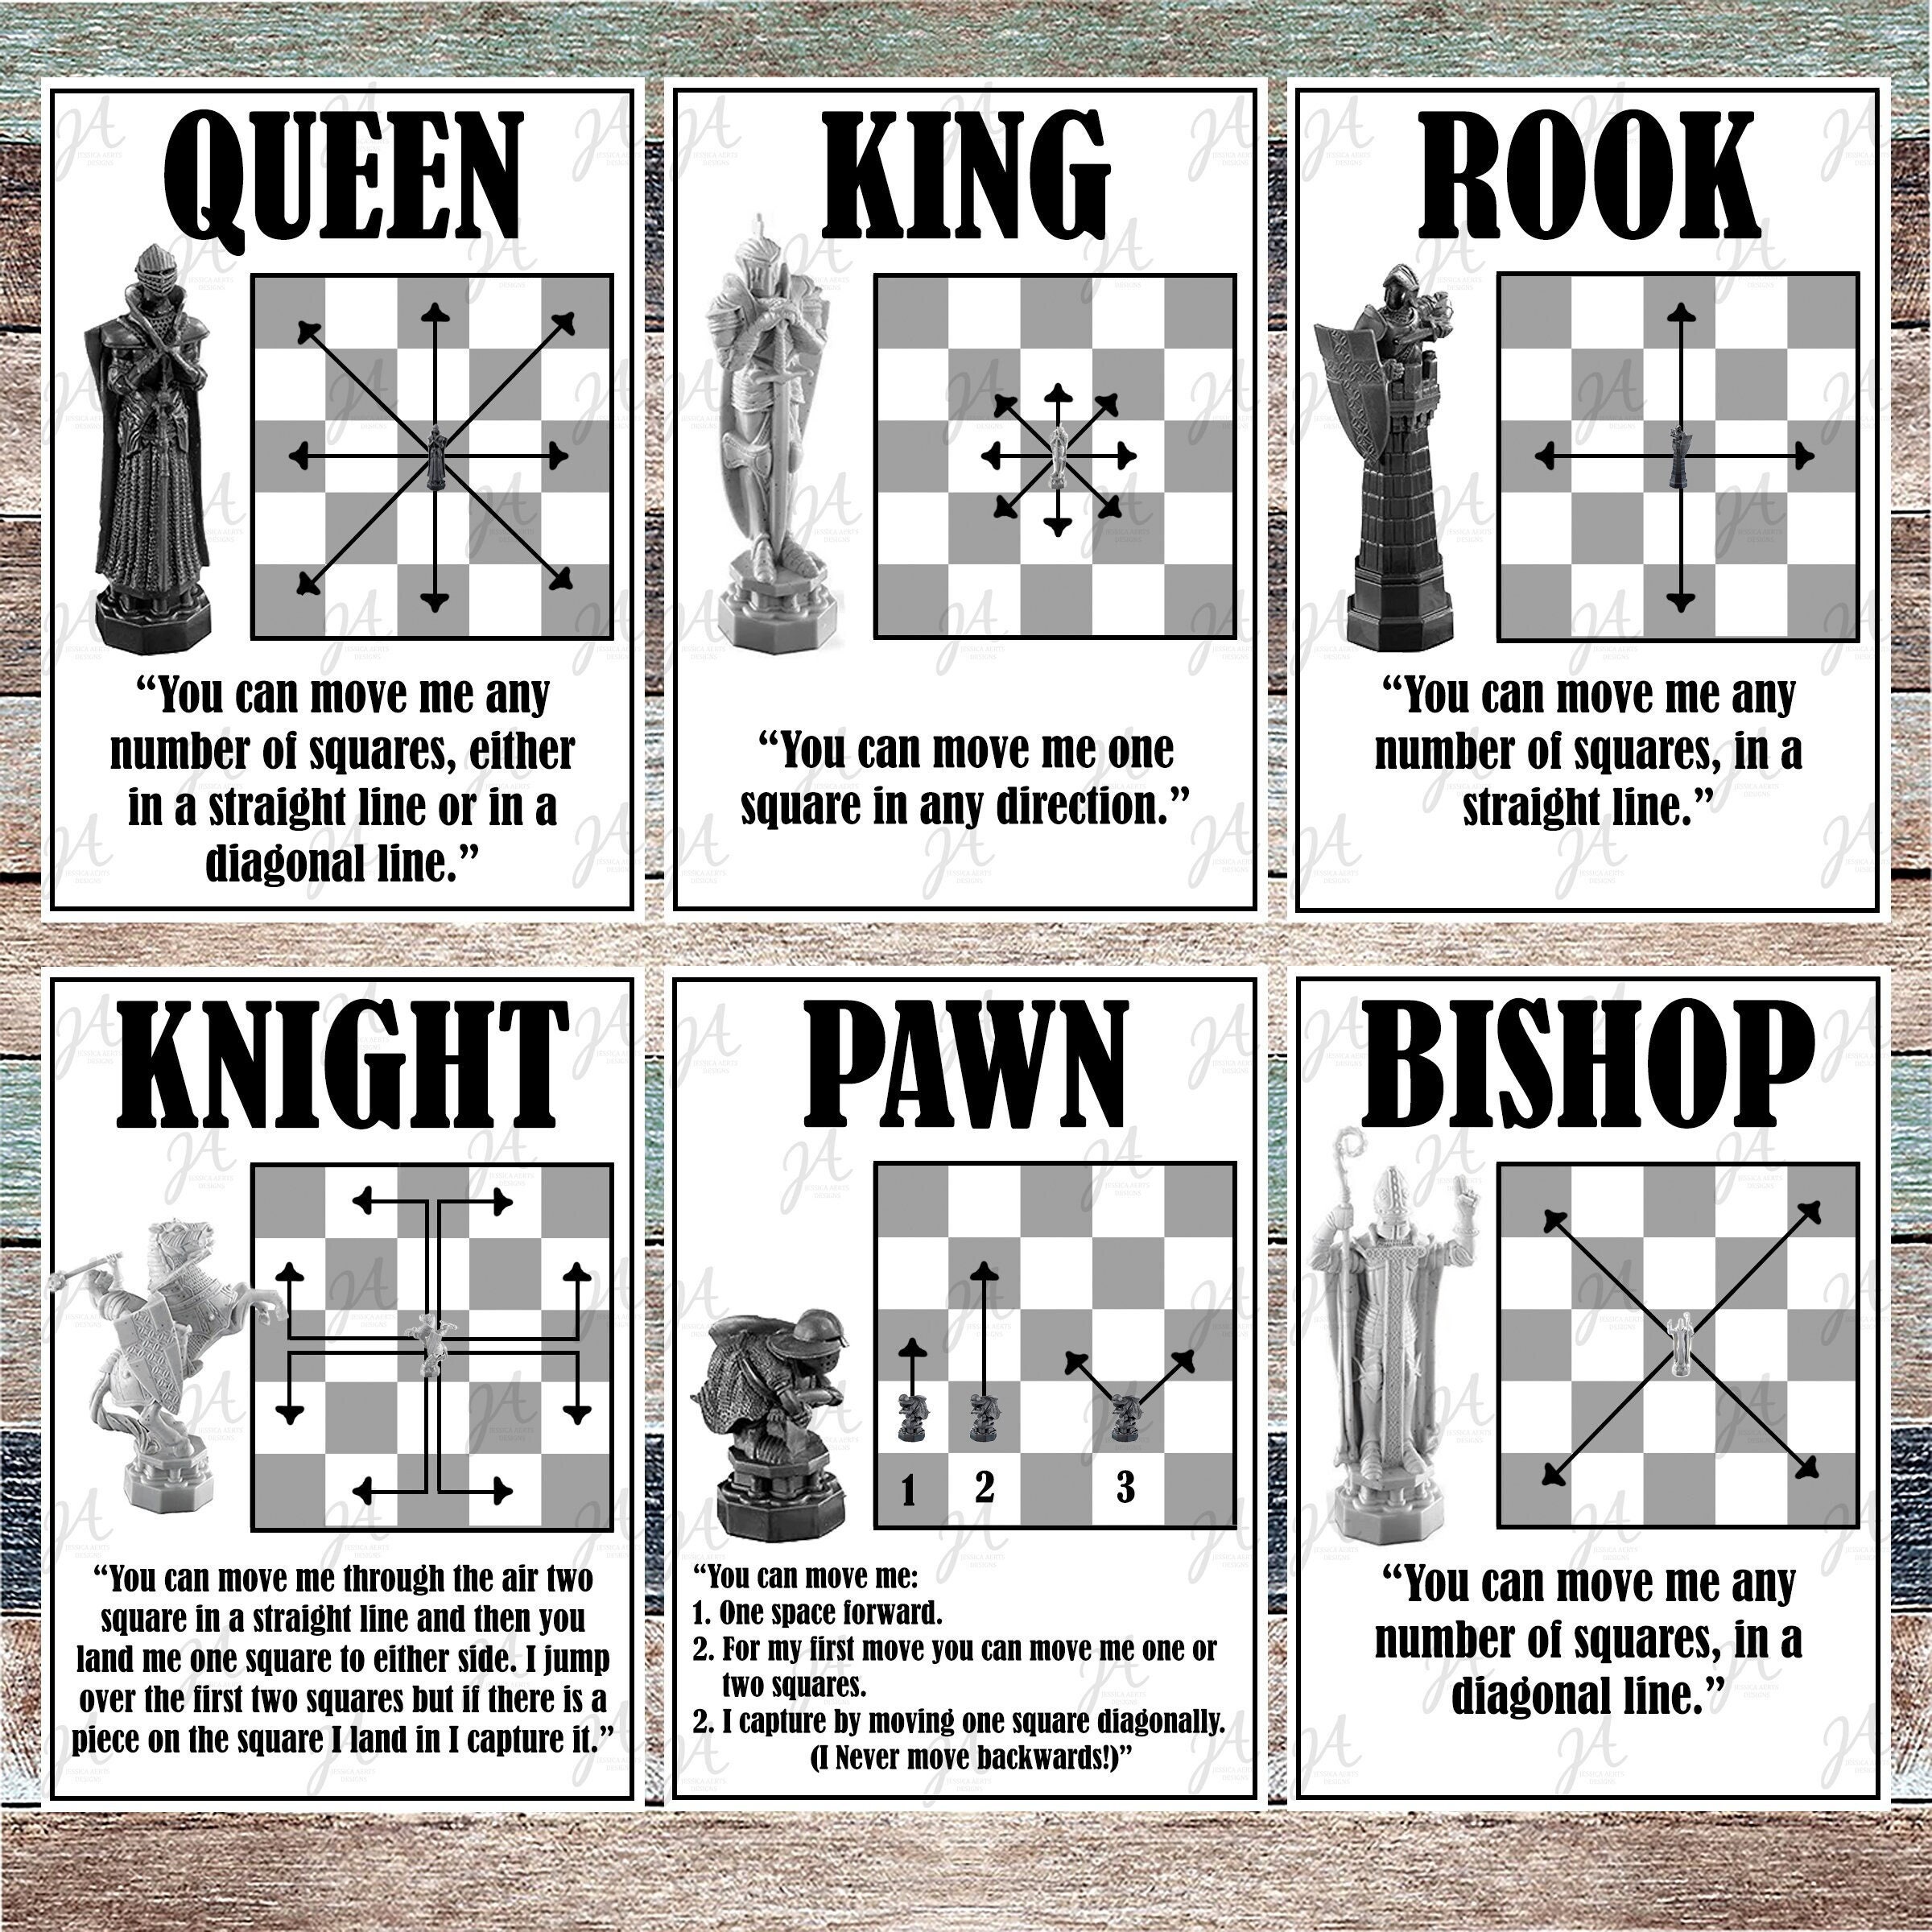 Printable Chess Rules